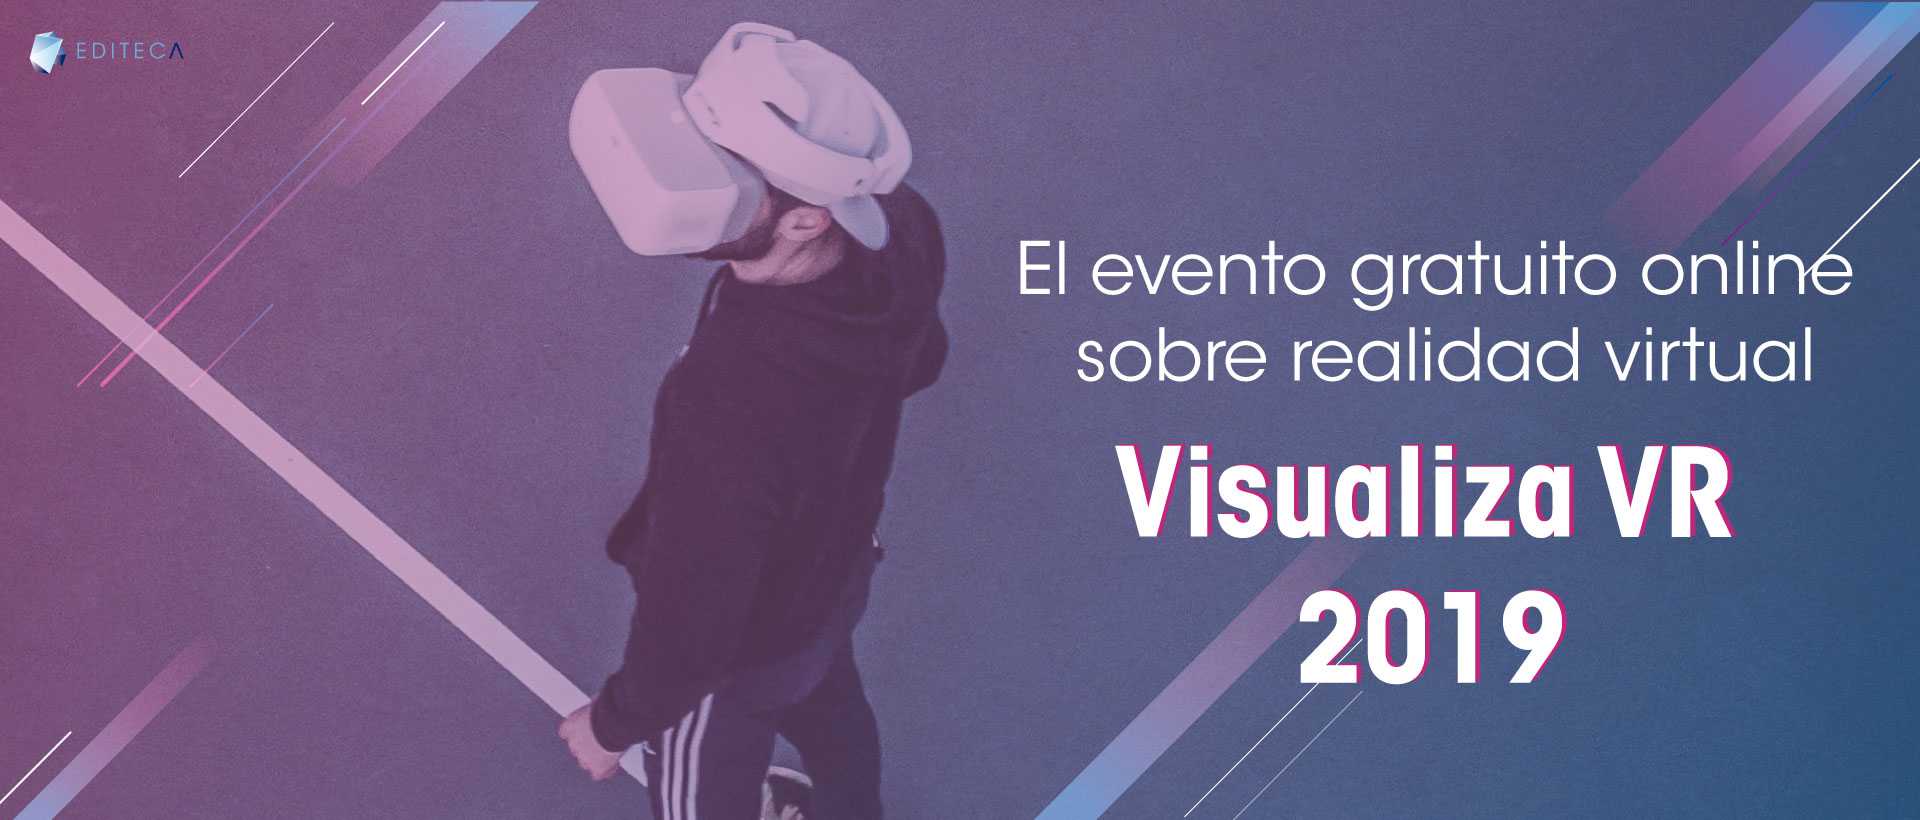 Visualiza VR 2019